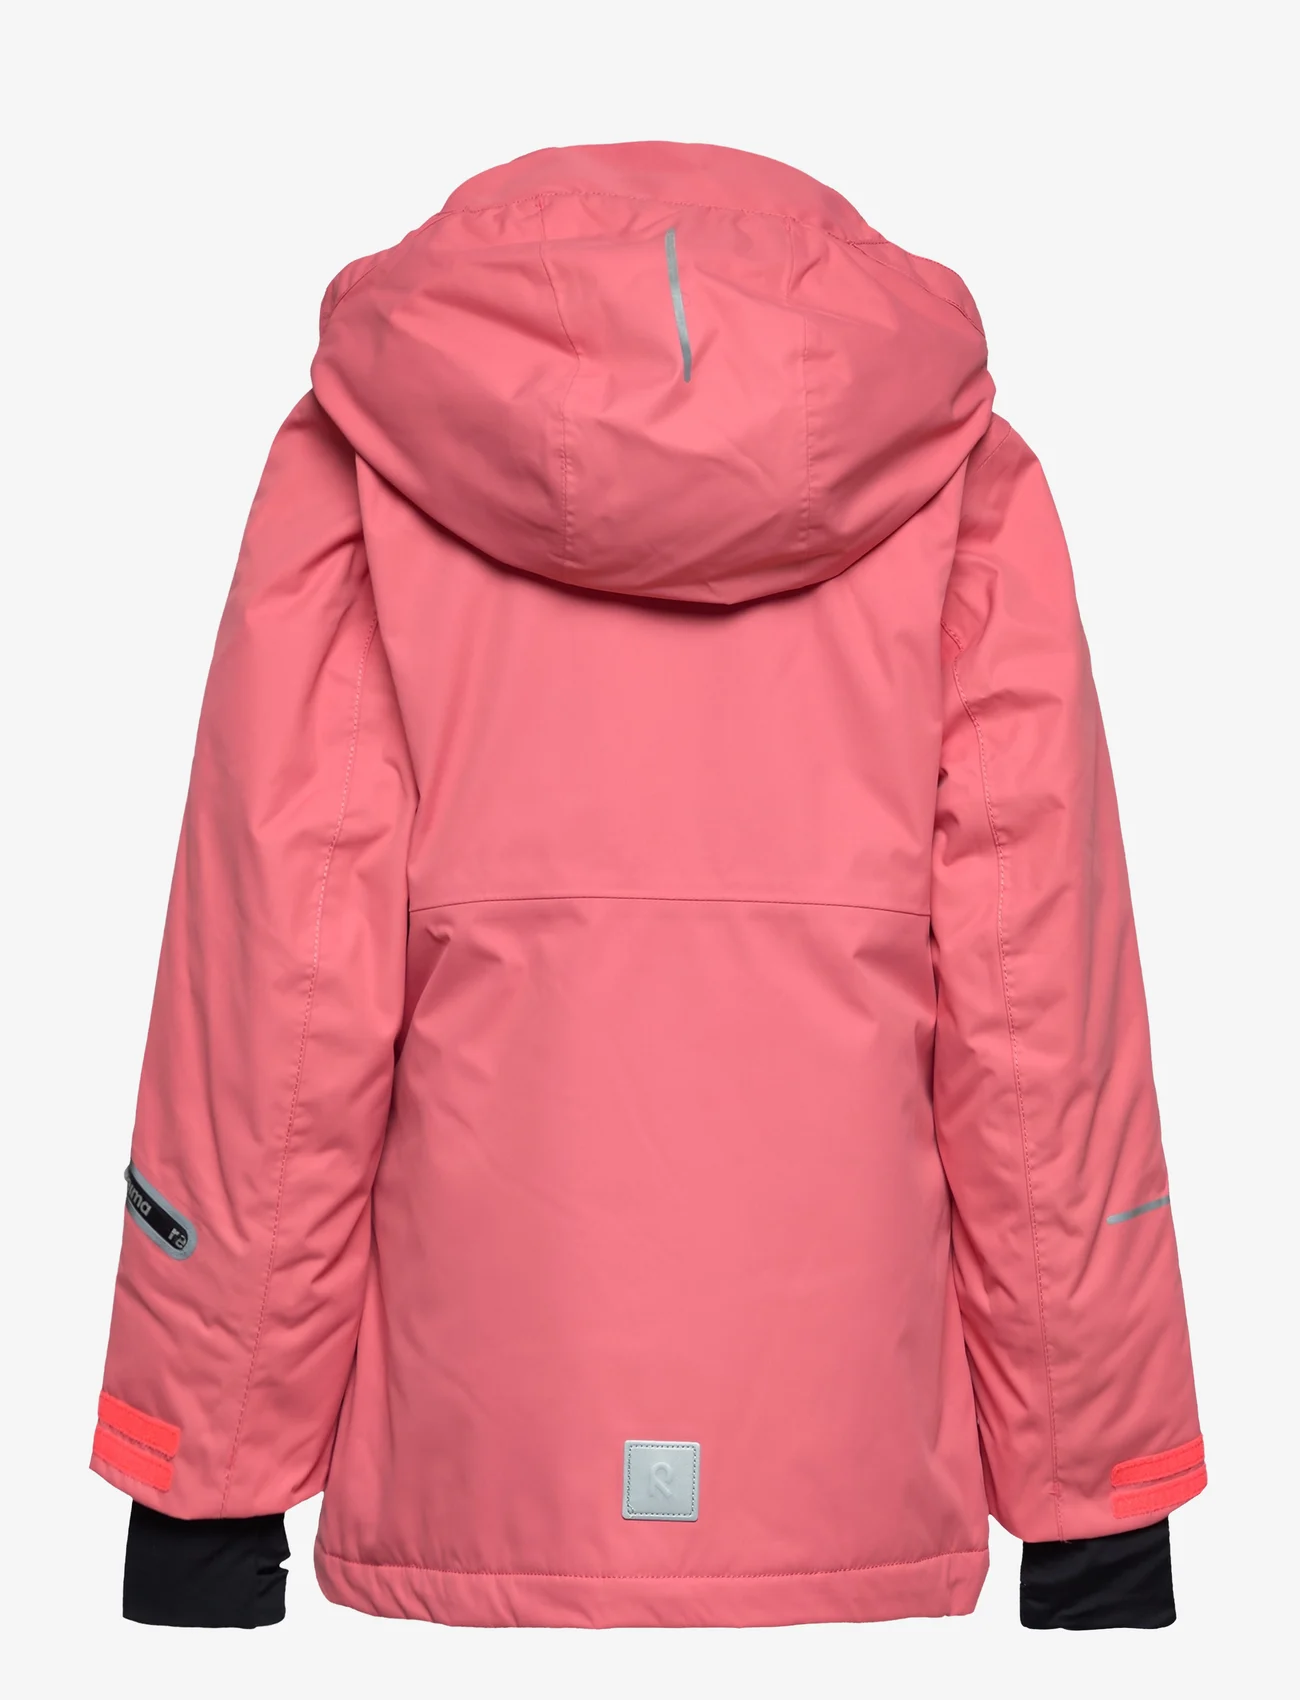 Reima - Kids' Reimatec winter jacket Kiiruna - talvitakki - pink coral - 1